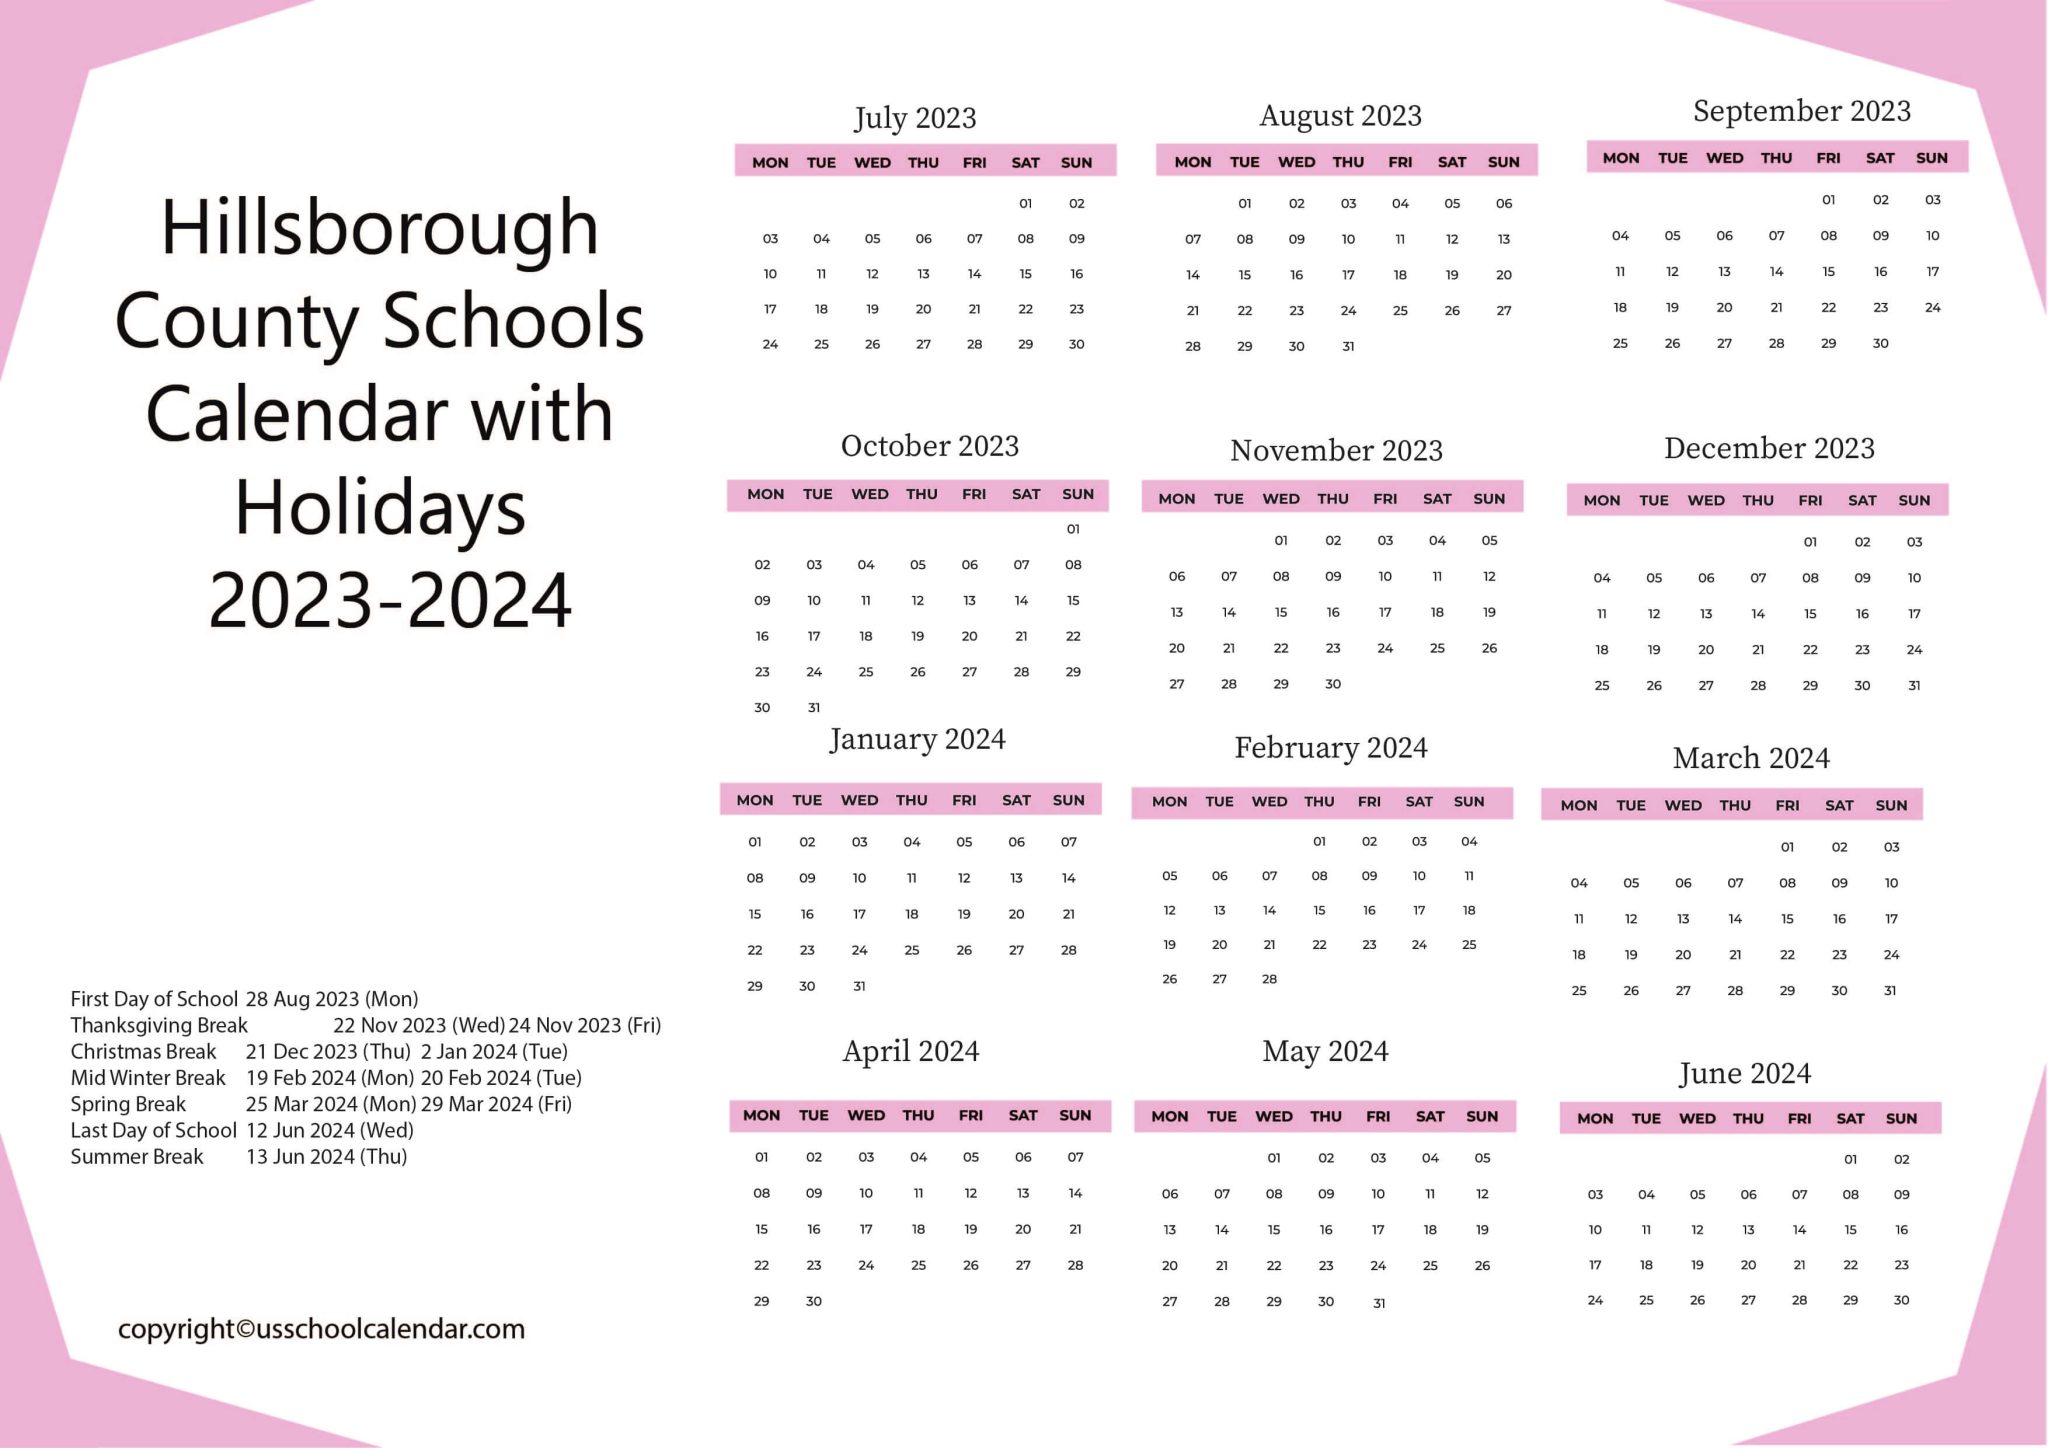 wcpss-wake-county-school-calendar-with-holidays-2023-2024